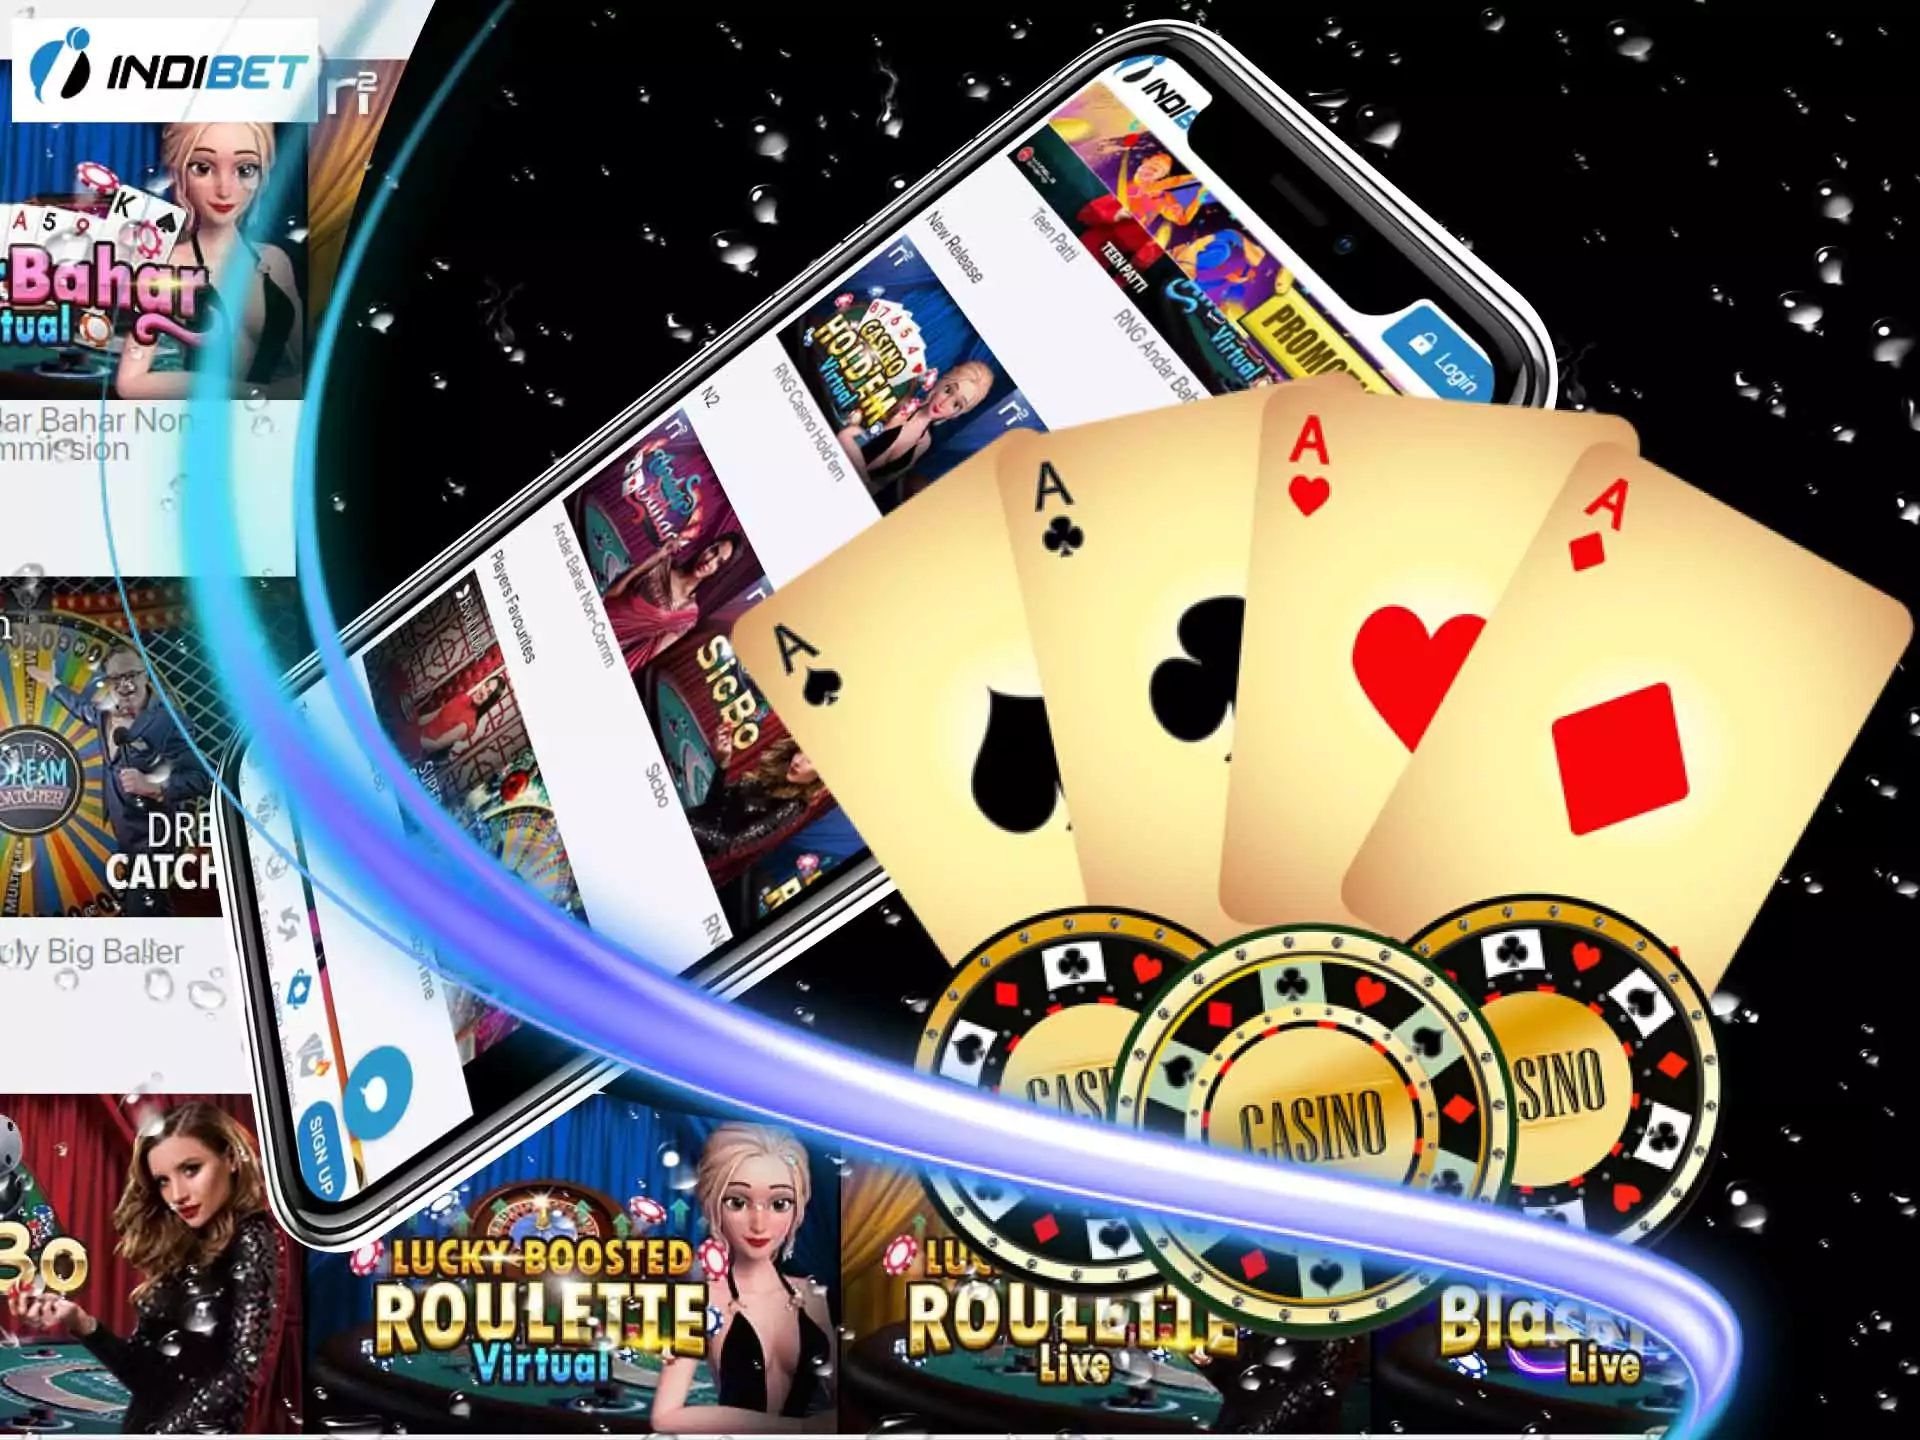 Indibet offers various casino games in its app.